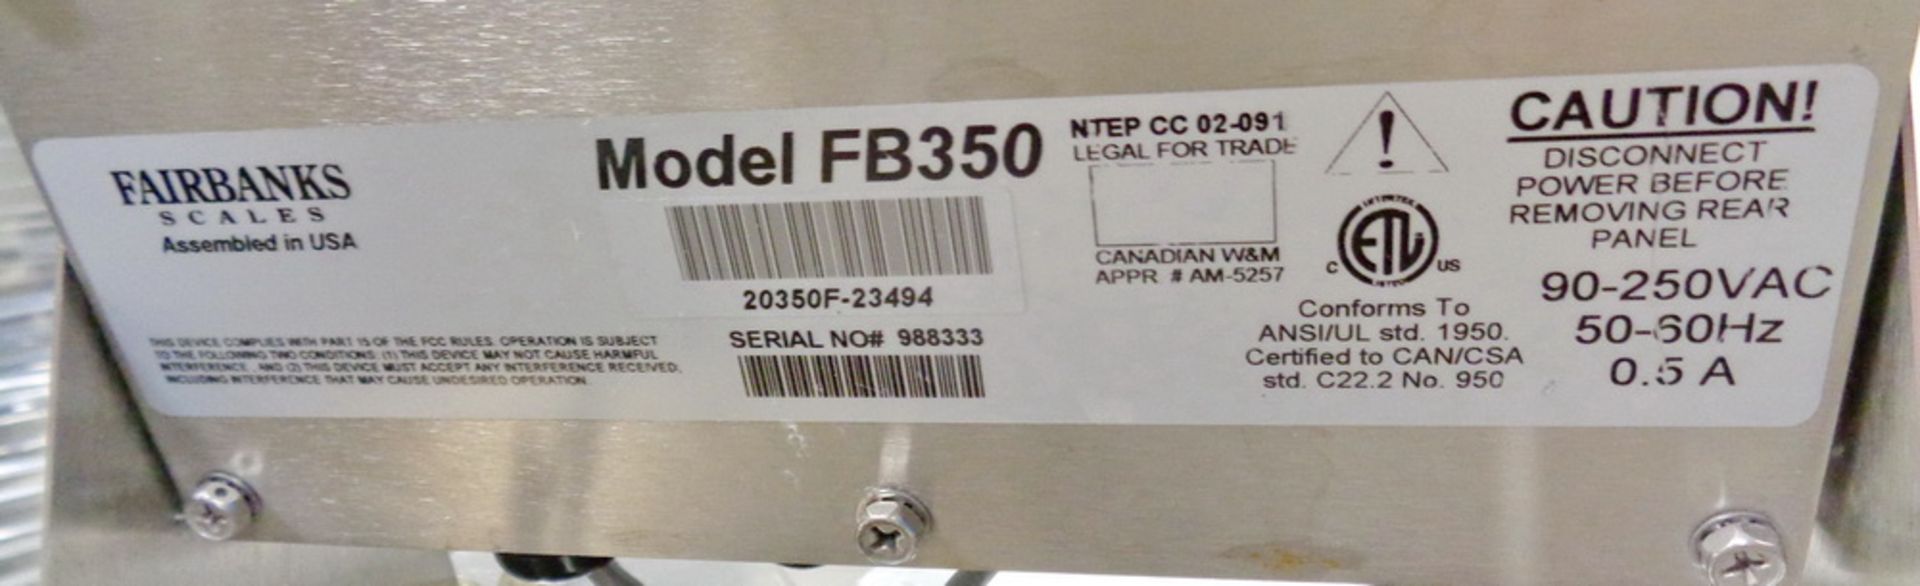 Fairbanks 50 lb x 0.001 lb Digital Platform Scale, Model FB 350, S/N 988333 - Image 4 of 4